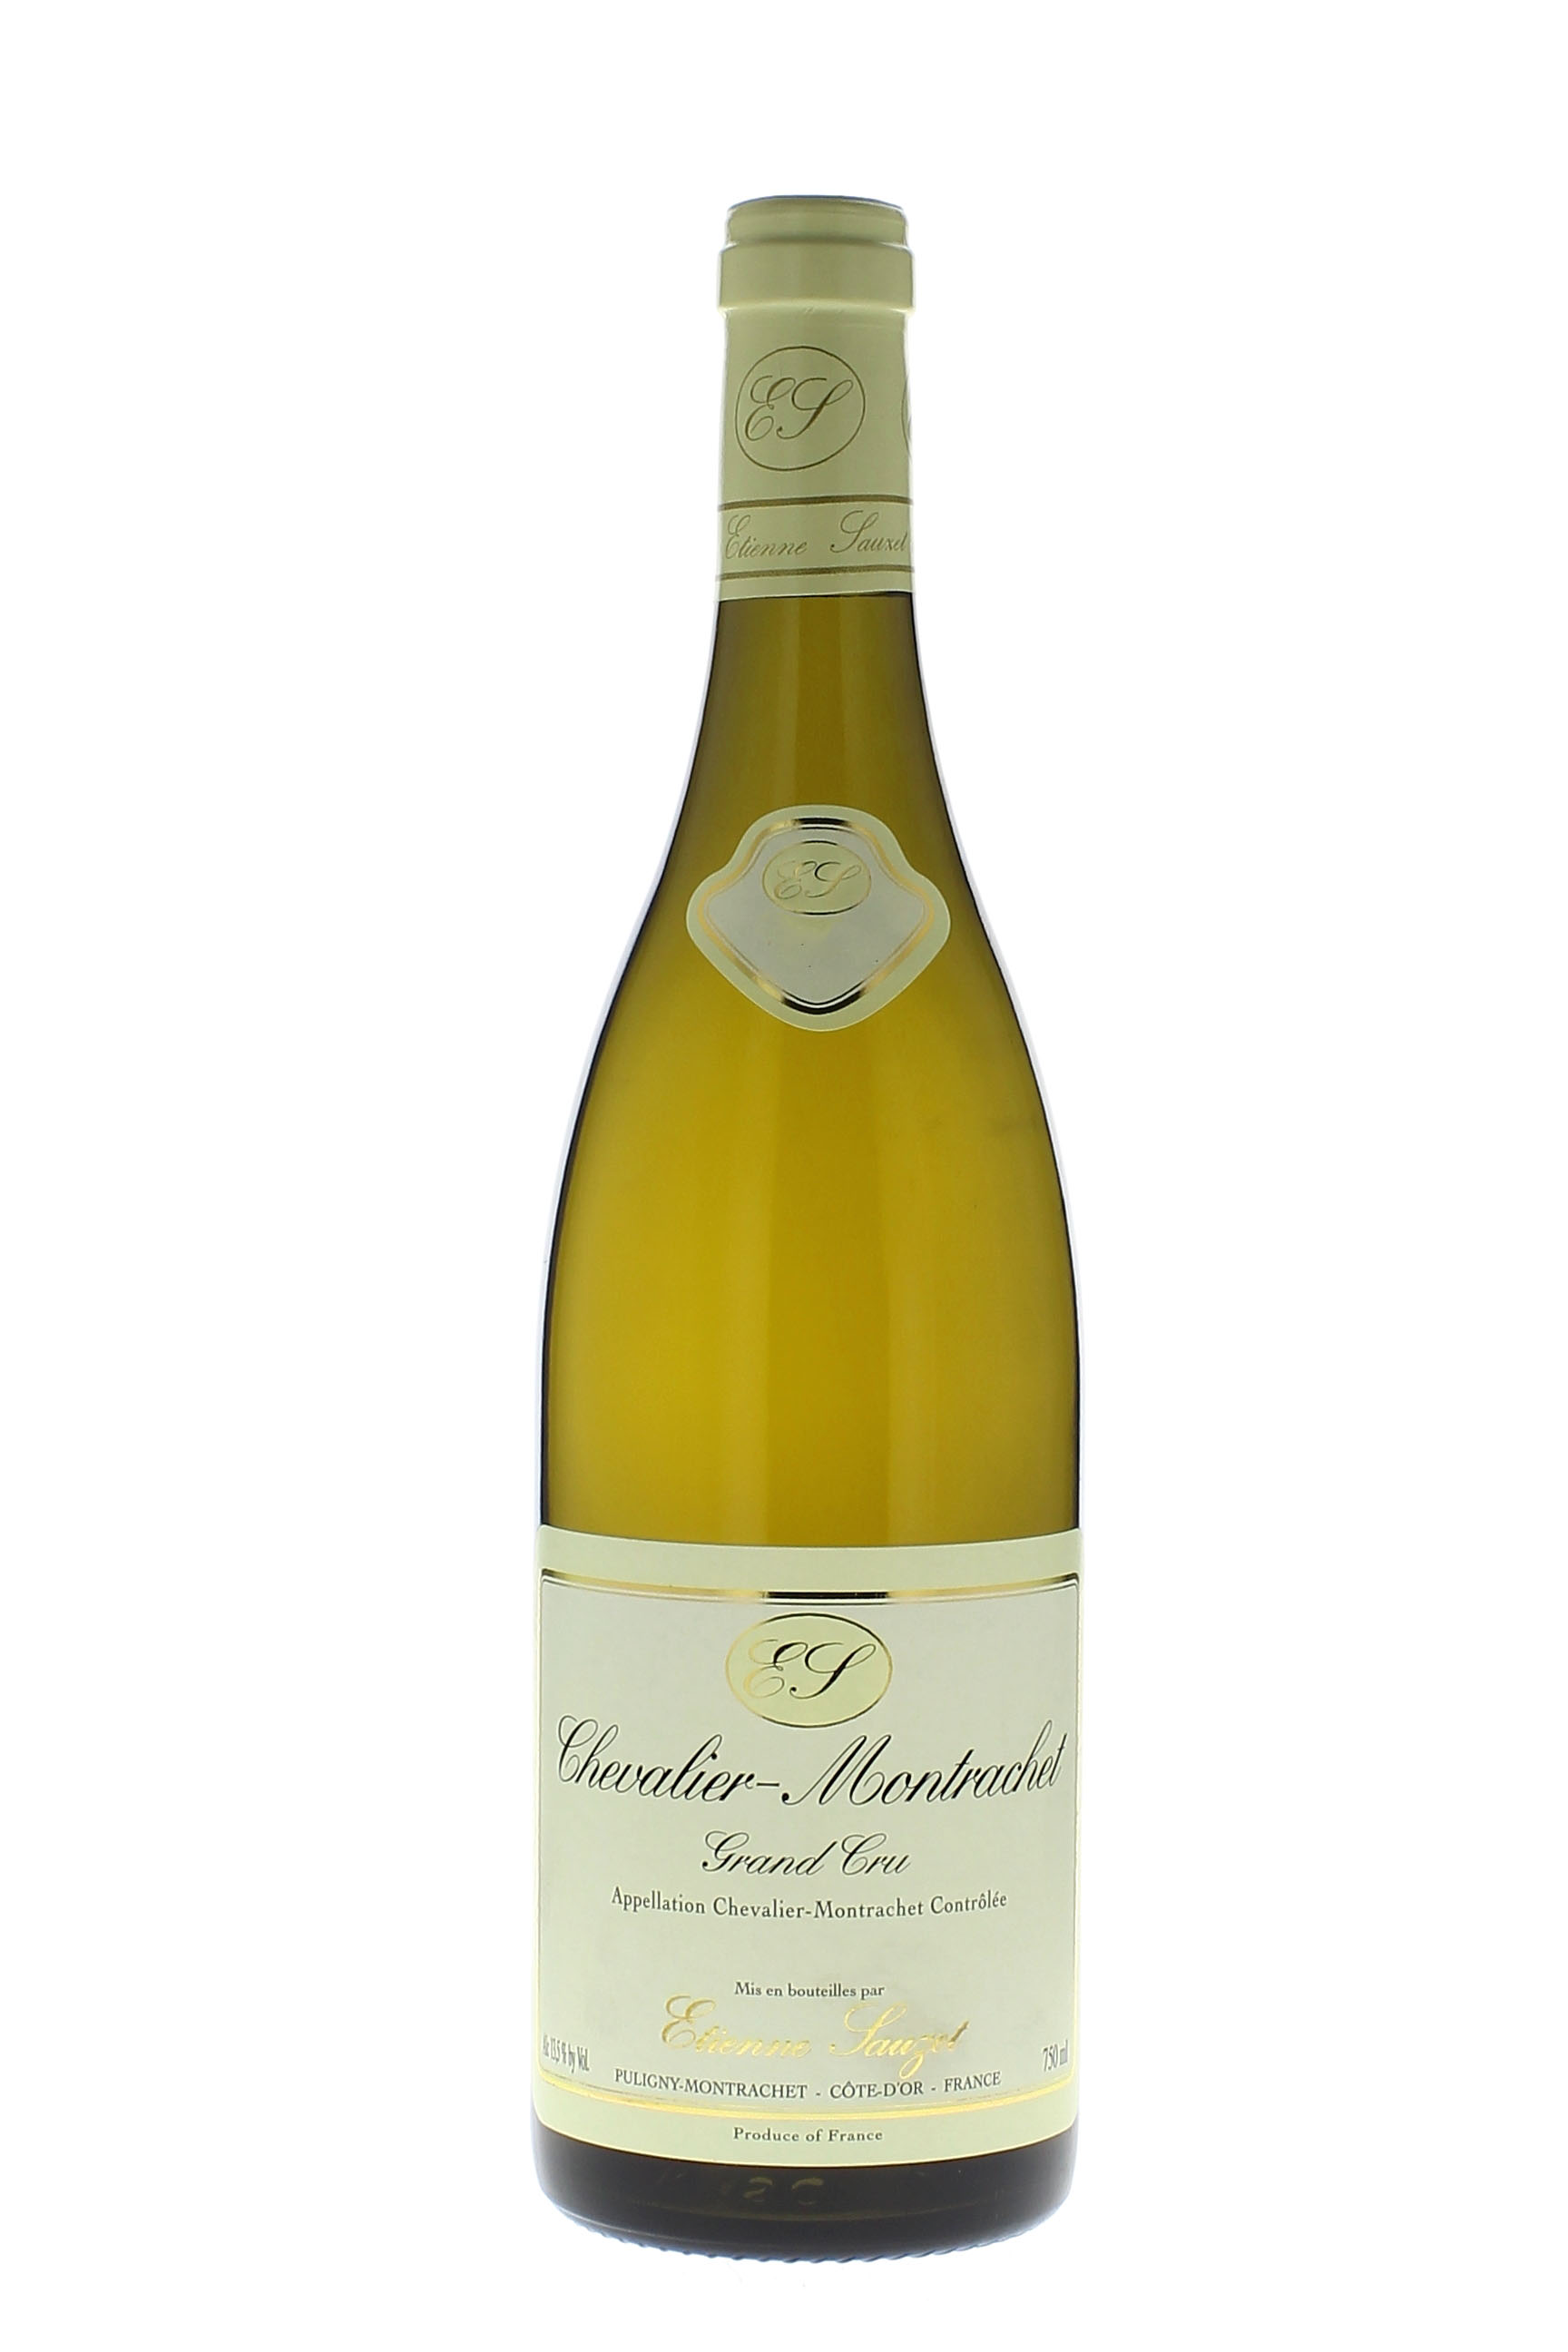 Chevalier montrachet 2016 Domaine SAUZET, Bourgogne blanc